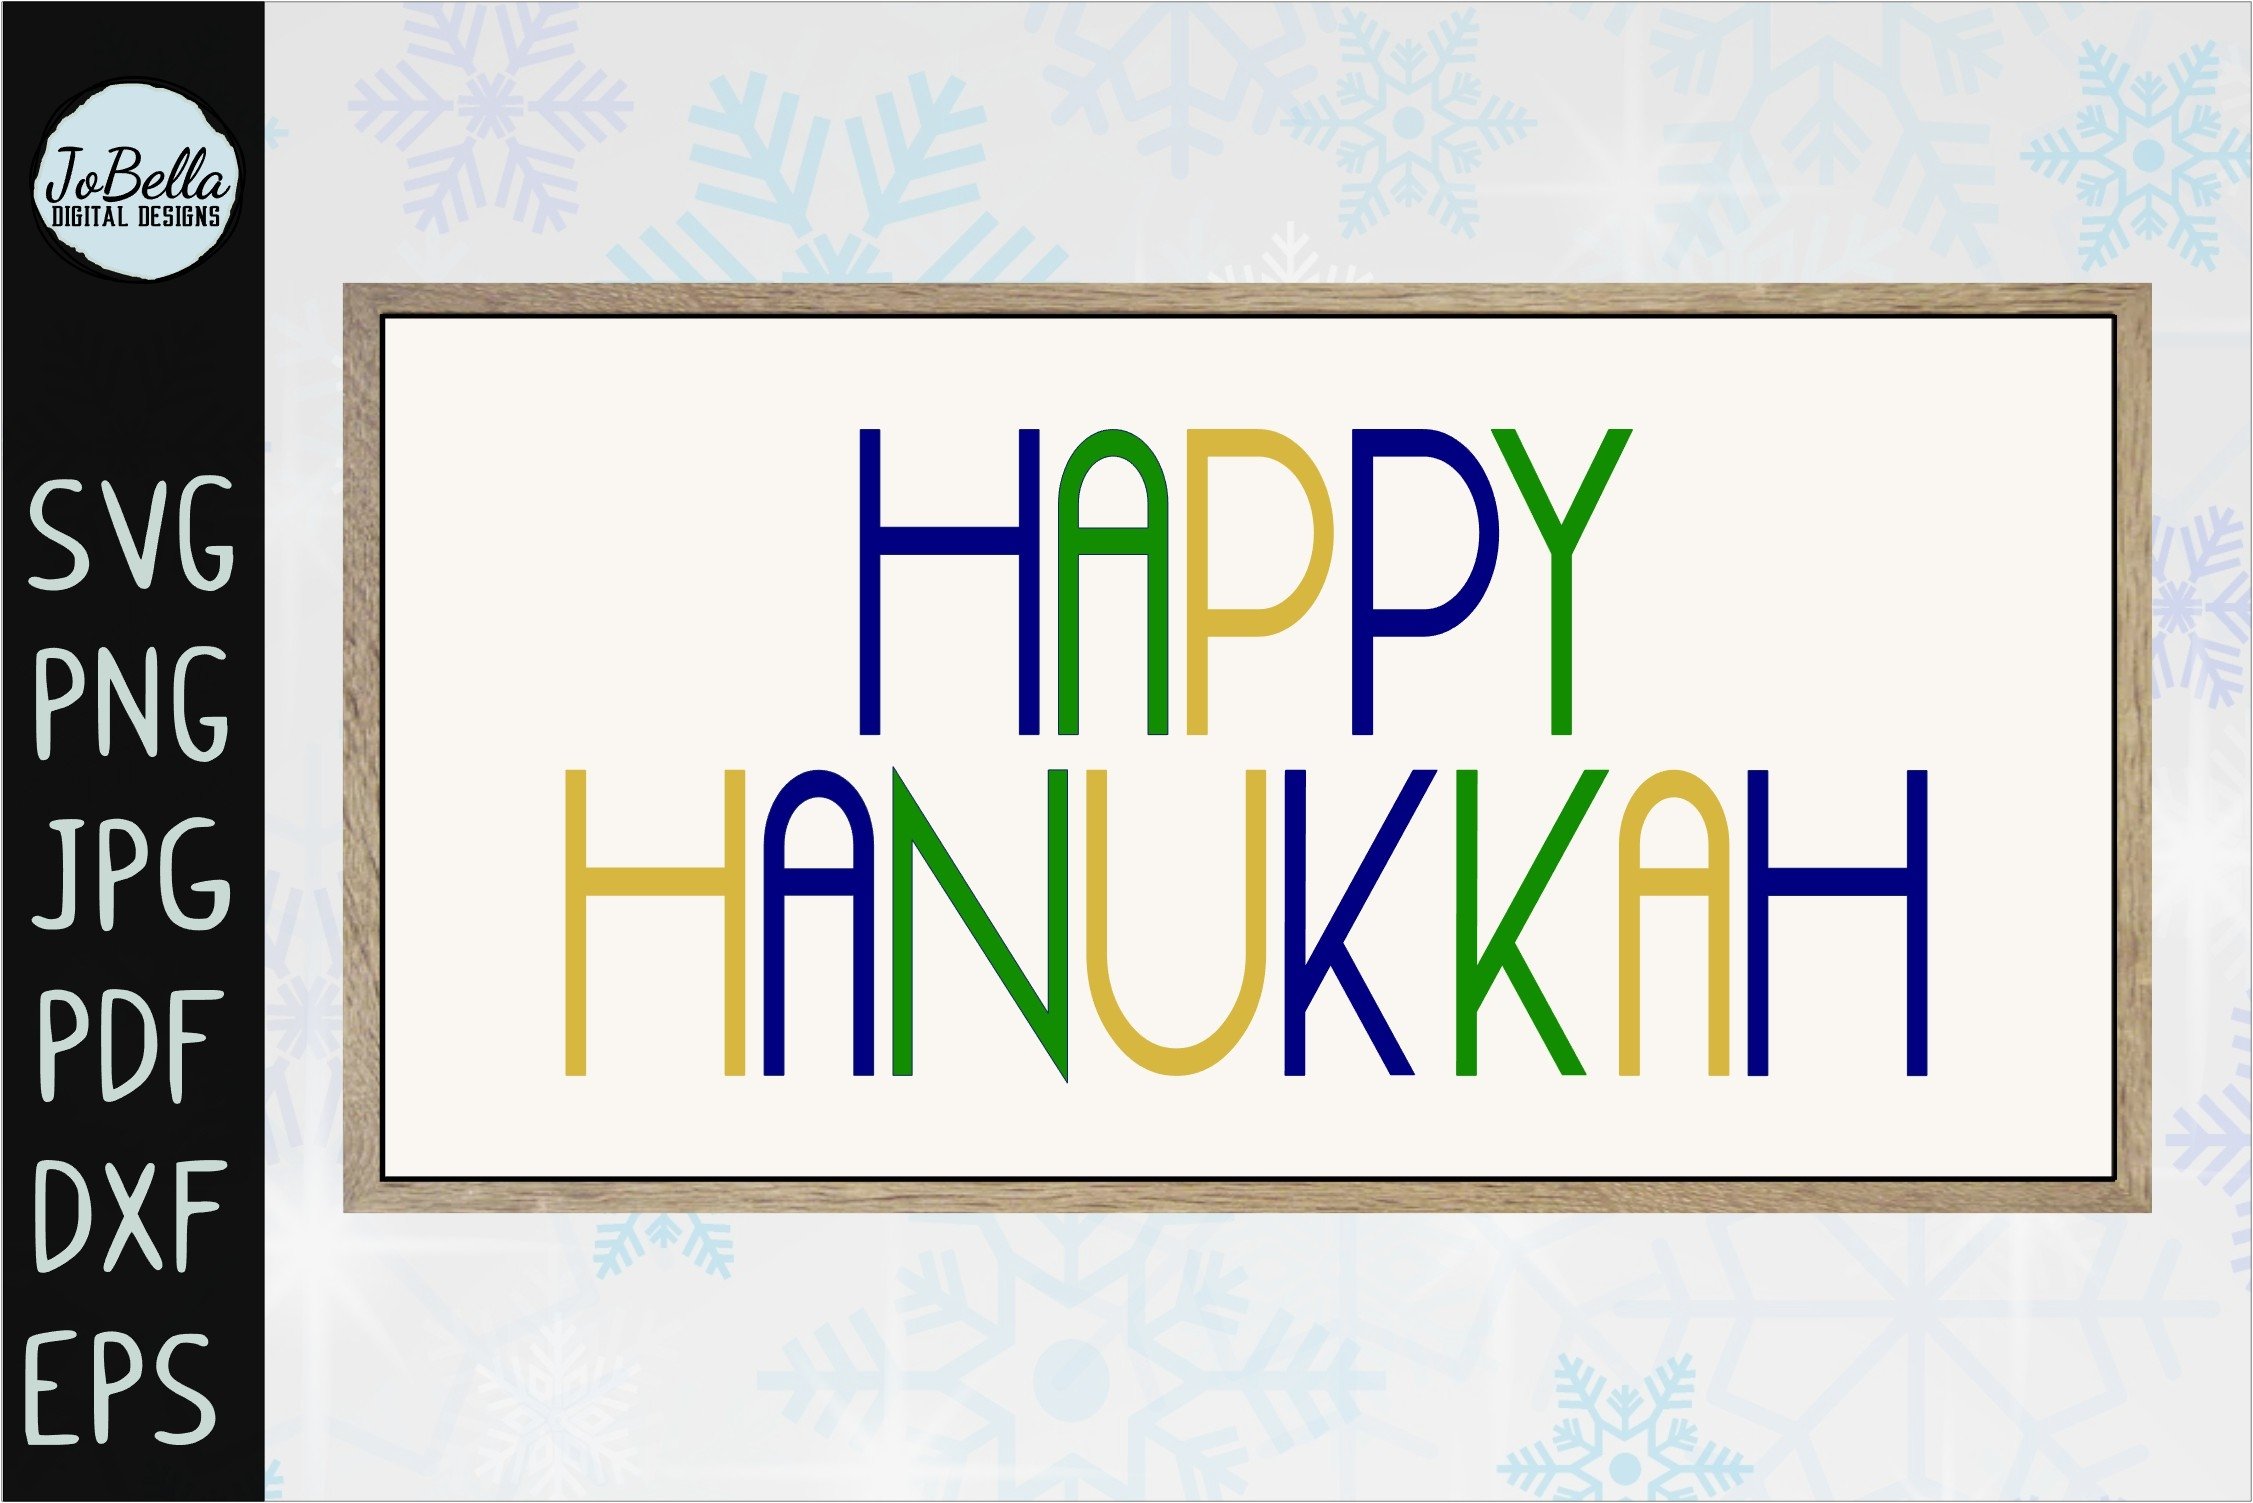 The colorful lettering "Happy Hanukkah".